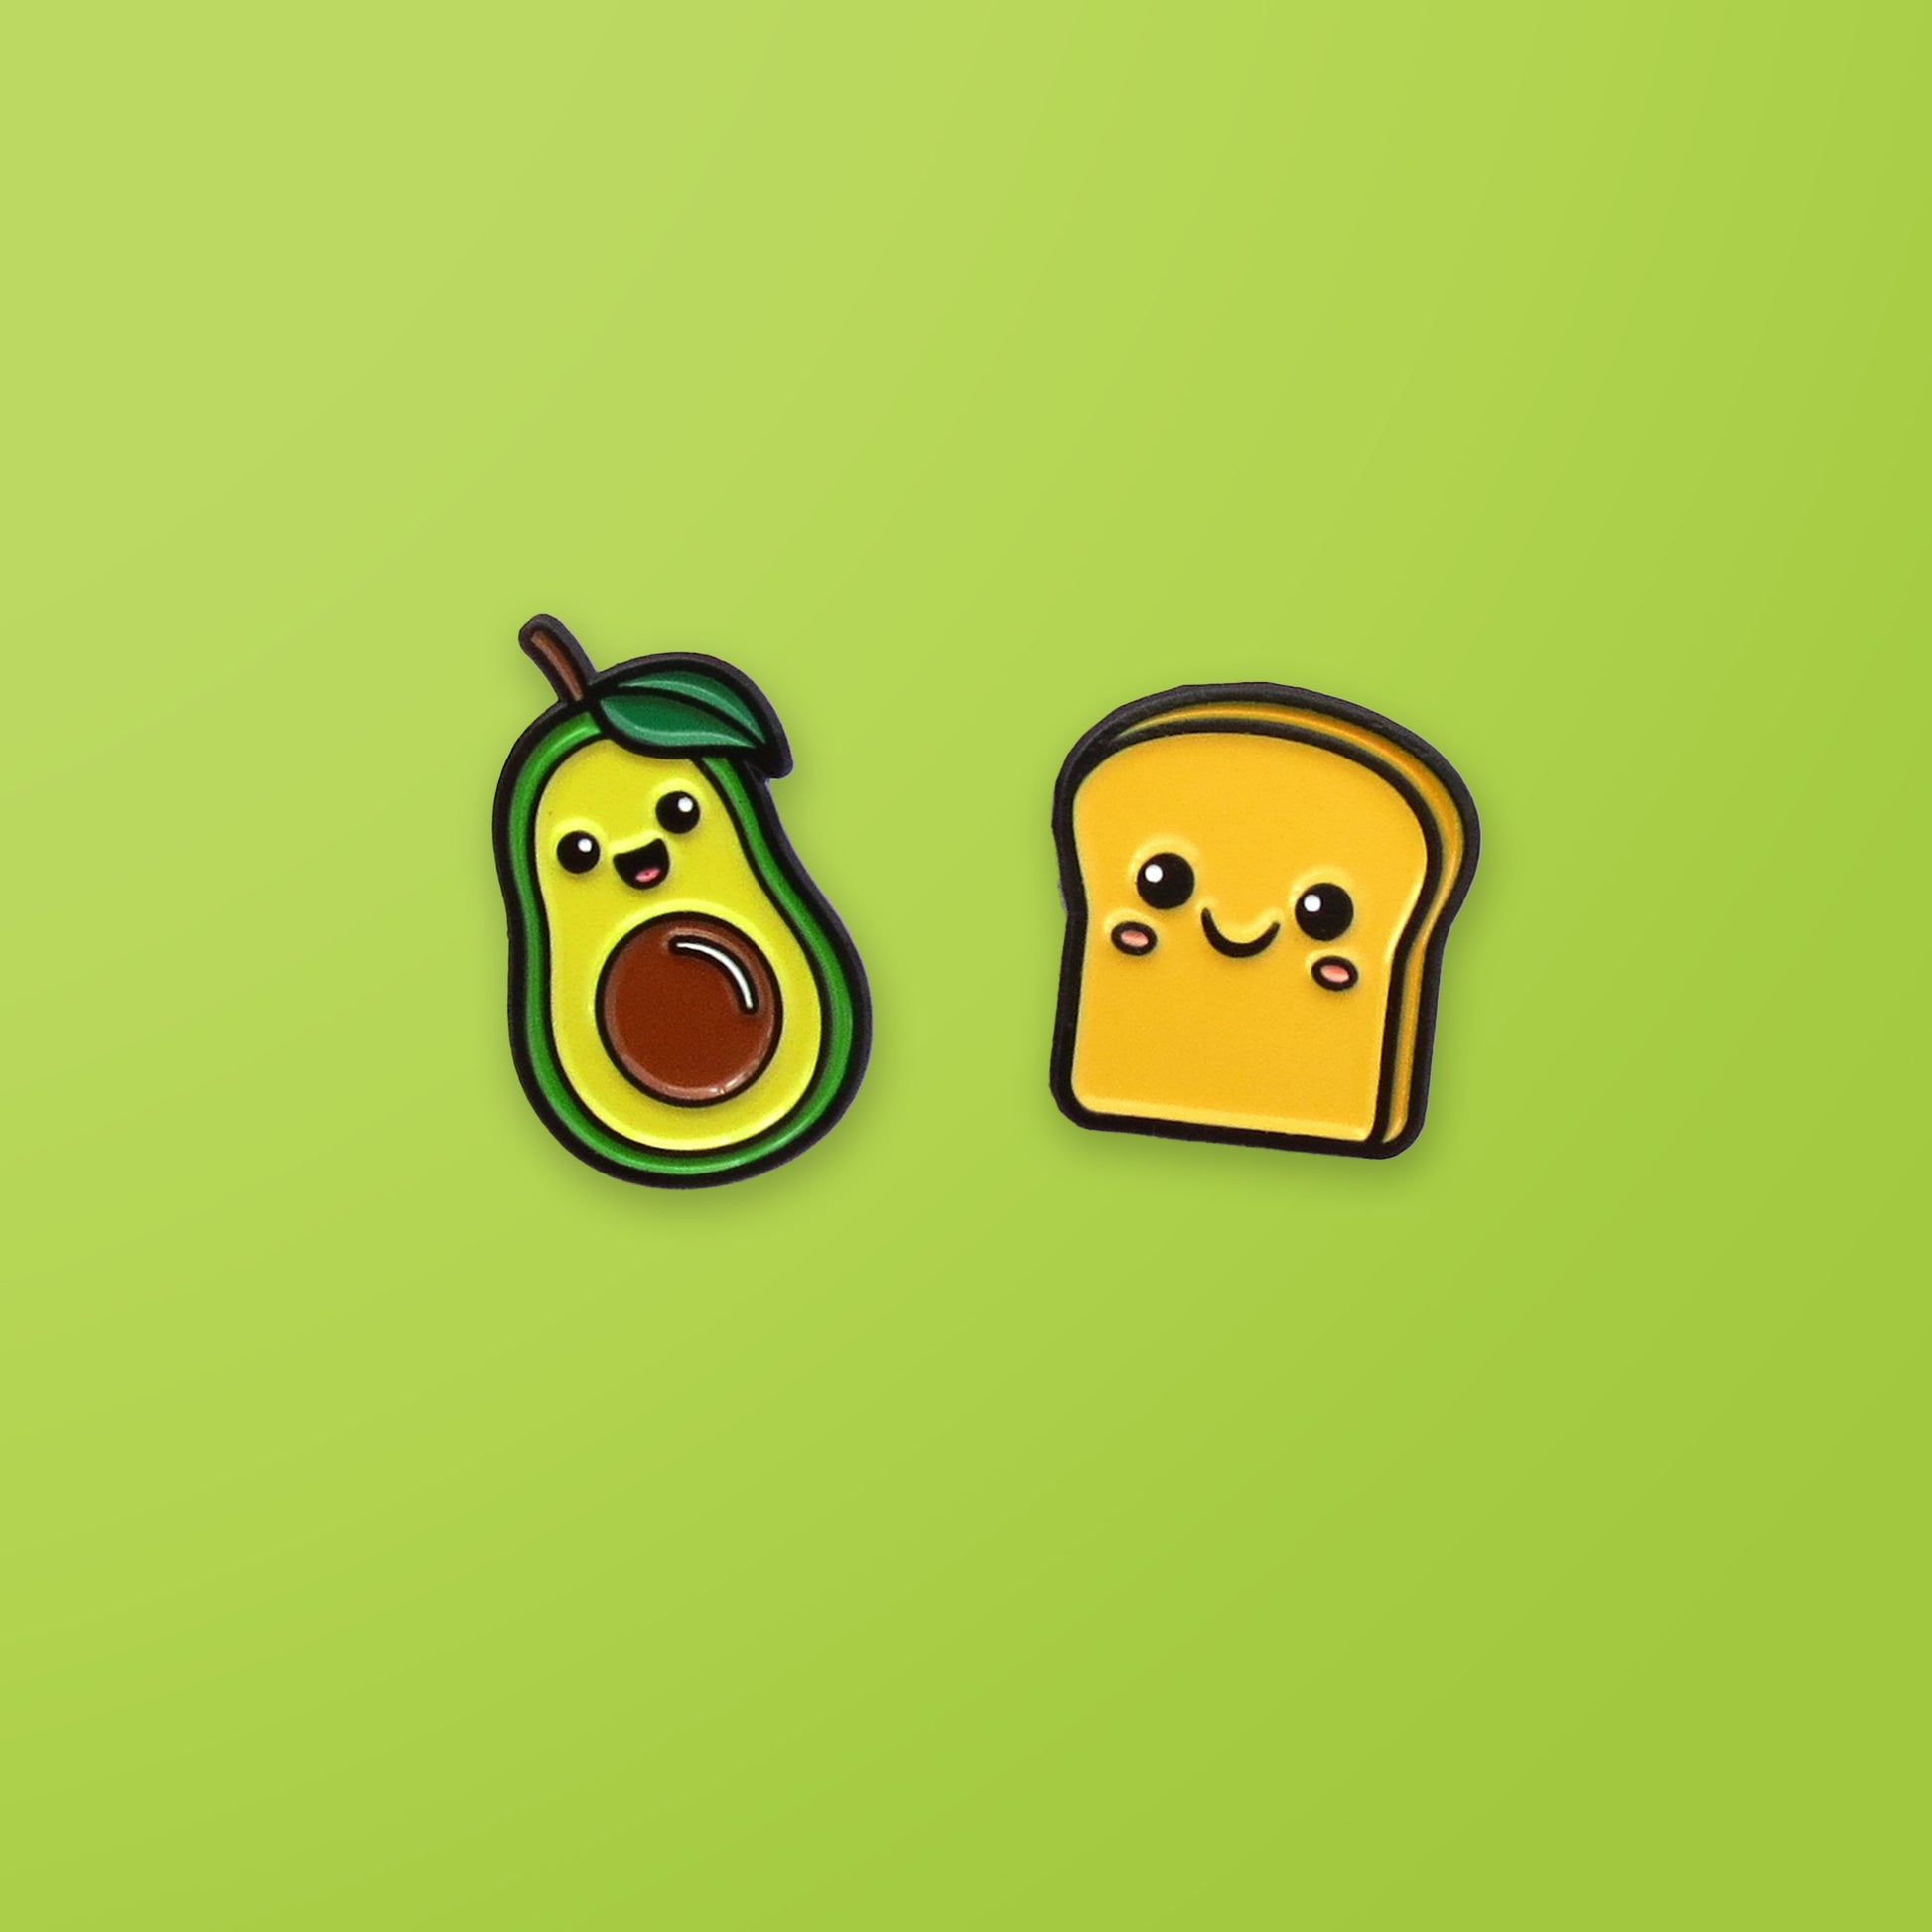 Avocado and Toast enamel pin set on green background